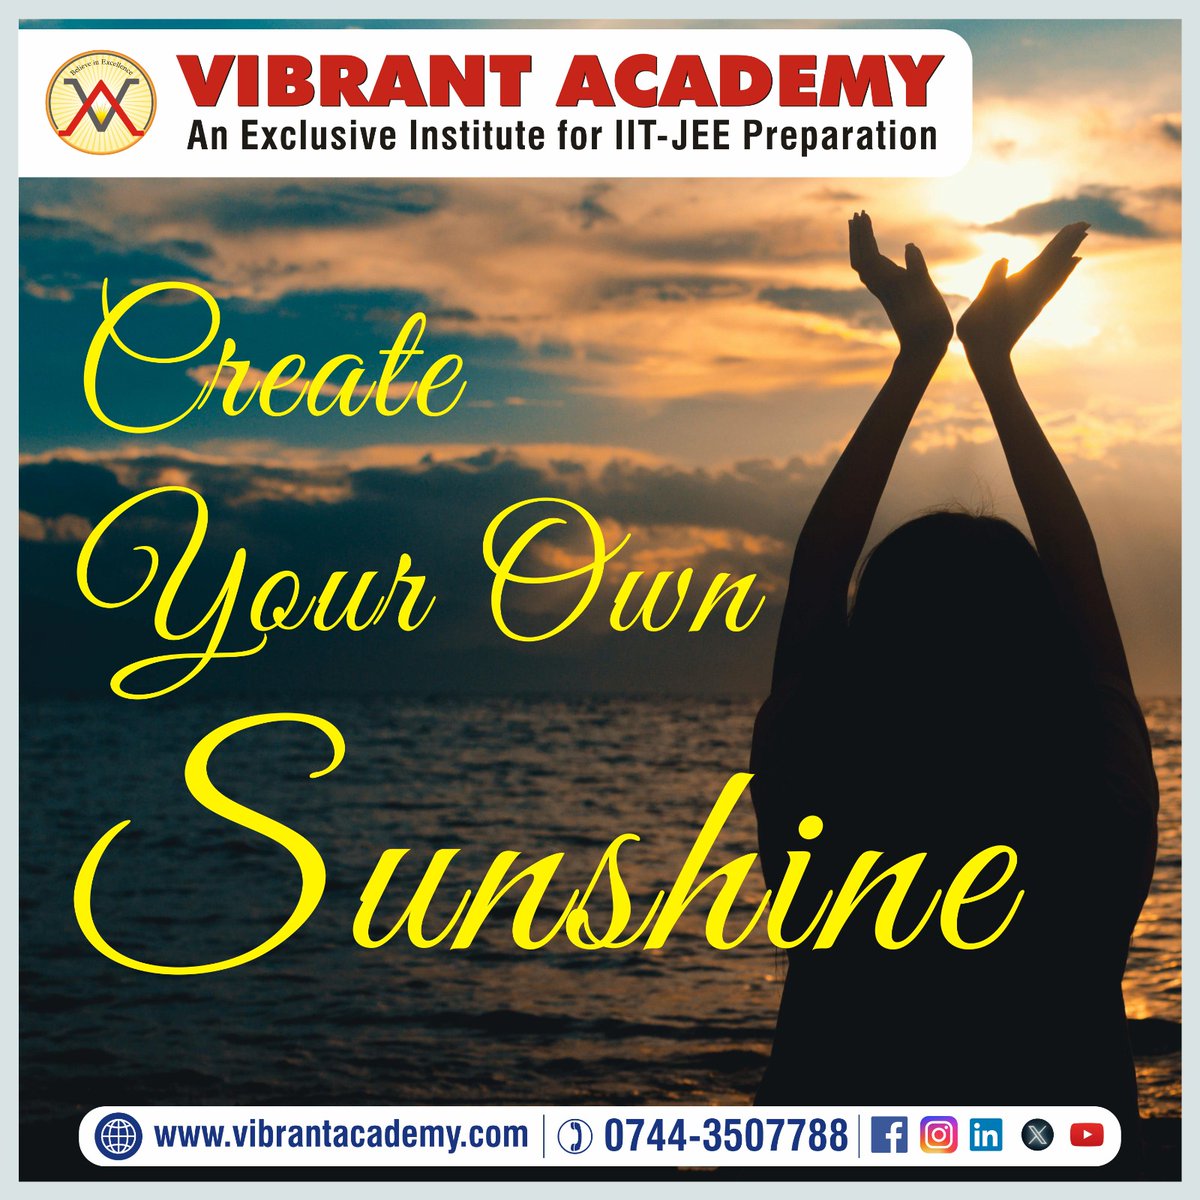 Create your own sunshine ✌✌👍

#vibrantacademy #kotacoaching #IITJEE #jeemains #JEEADVANCED #iitjeepreparation